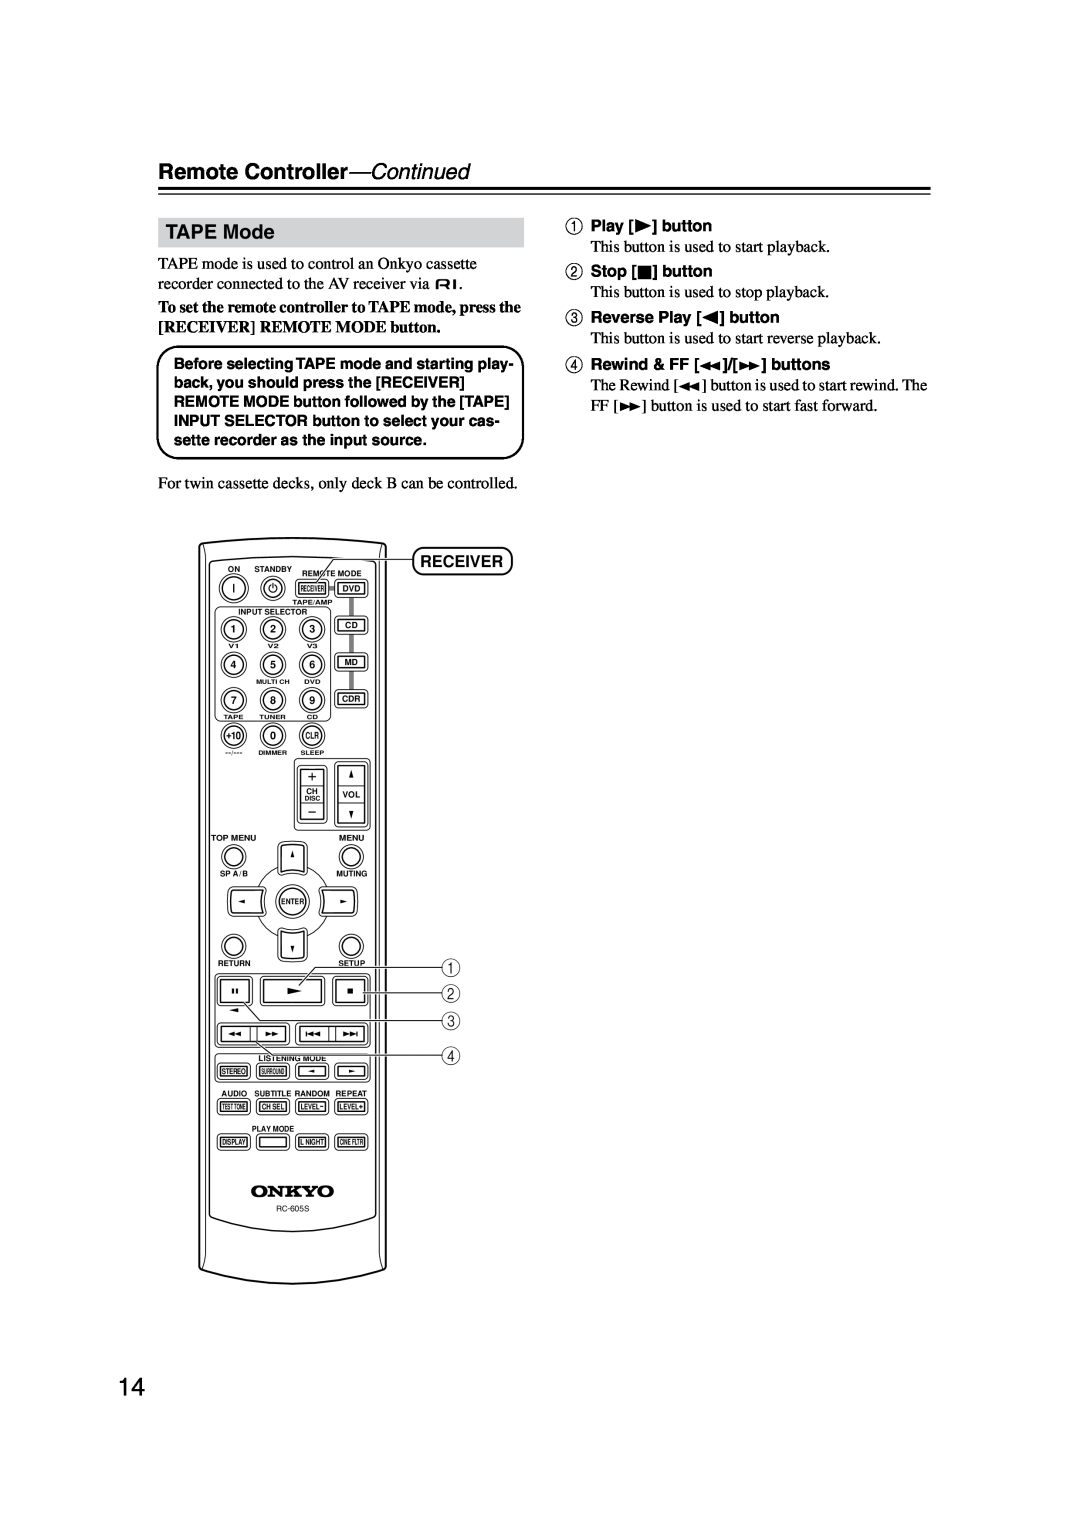 Onkyo TX-SR303E instruction manual TAPE Mode, Remote Controller-Continued 